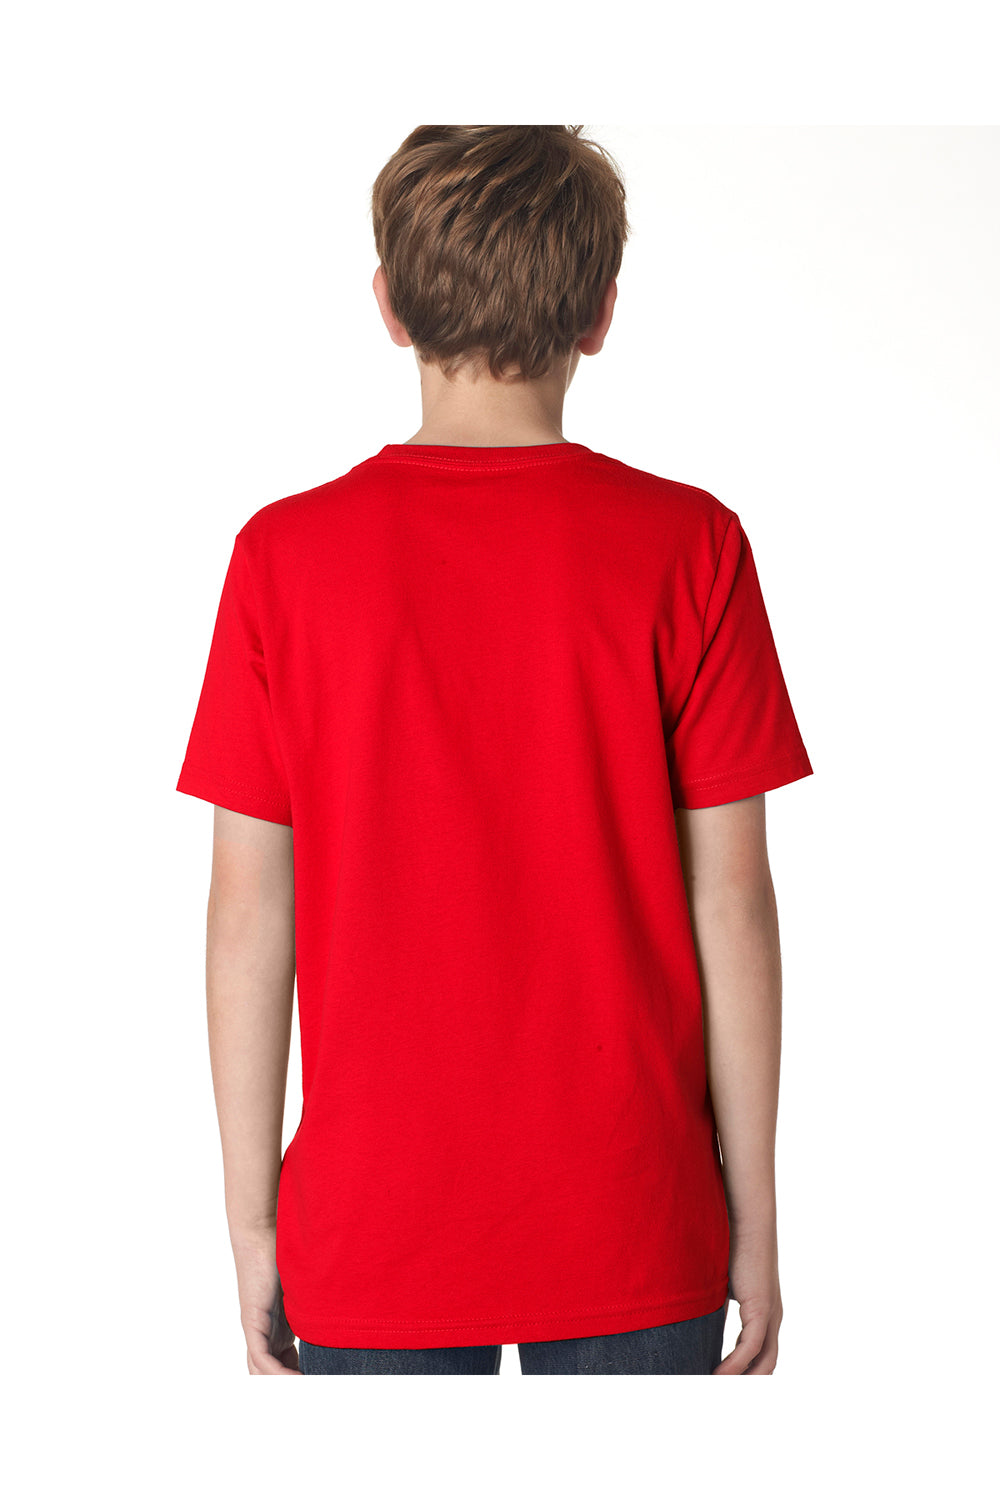 Next Level 3310 Youth Fine Jersey Short Sleeve Crewneck T-Shirt Red Back